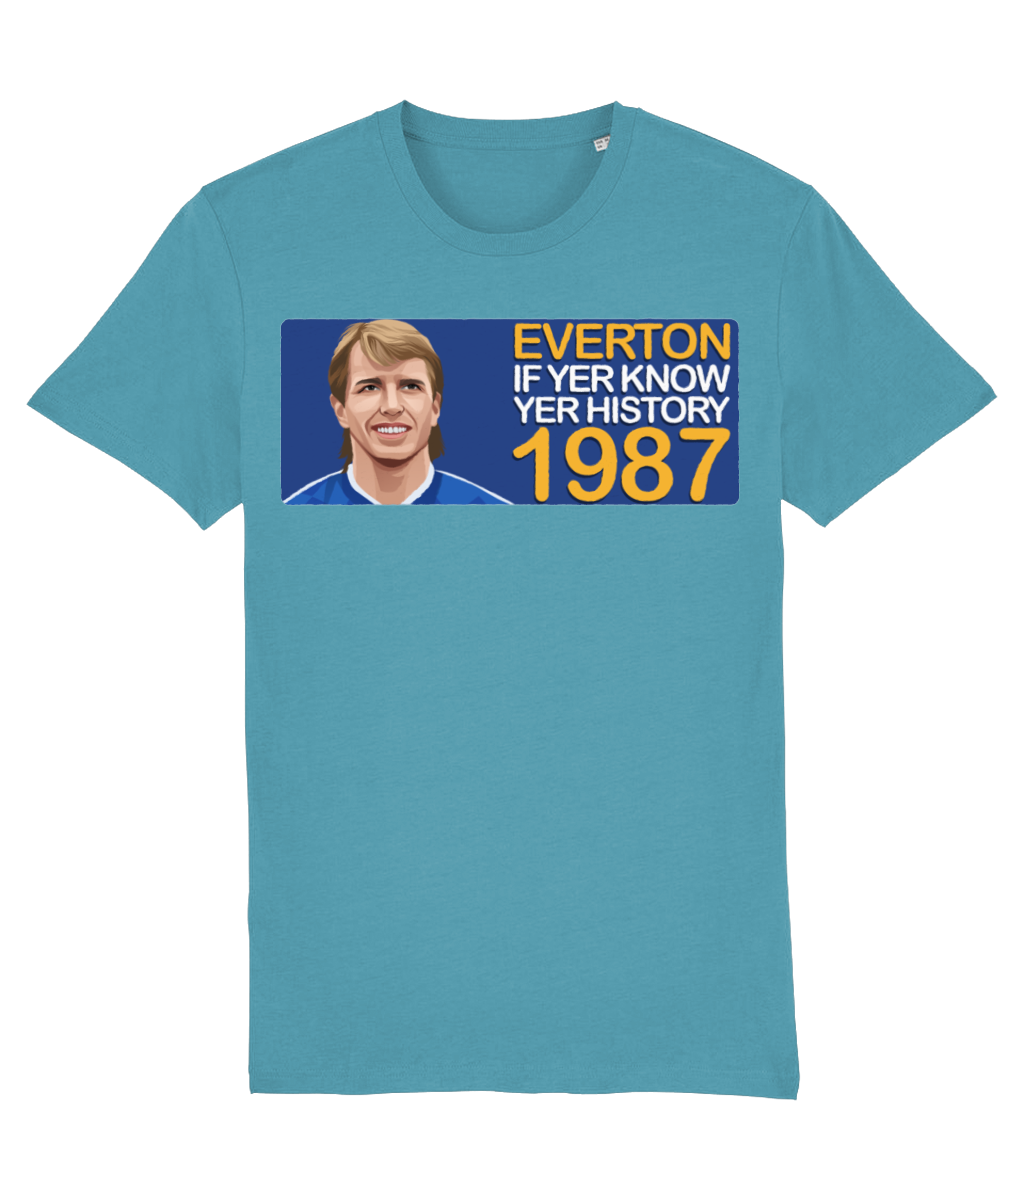 Everton 1987 Trevor Steven If Yer Know Yer History Unisex T-Shirt Stanley/Stella Retrotext Atlantic Blue XX-Small 